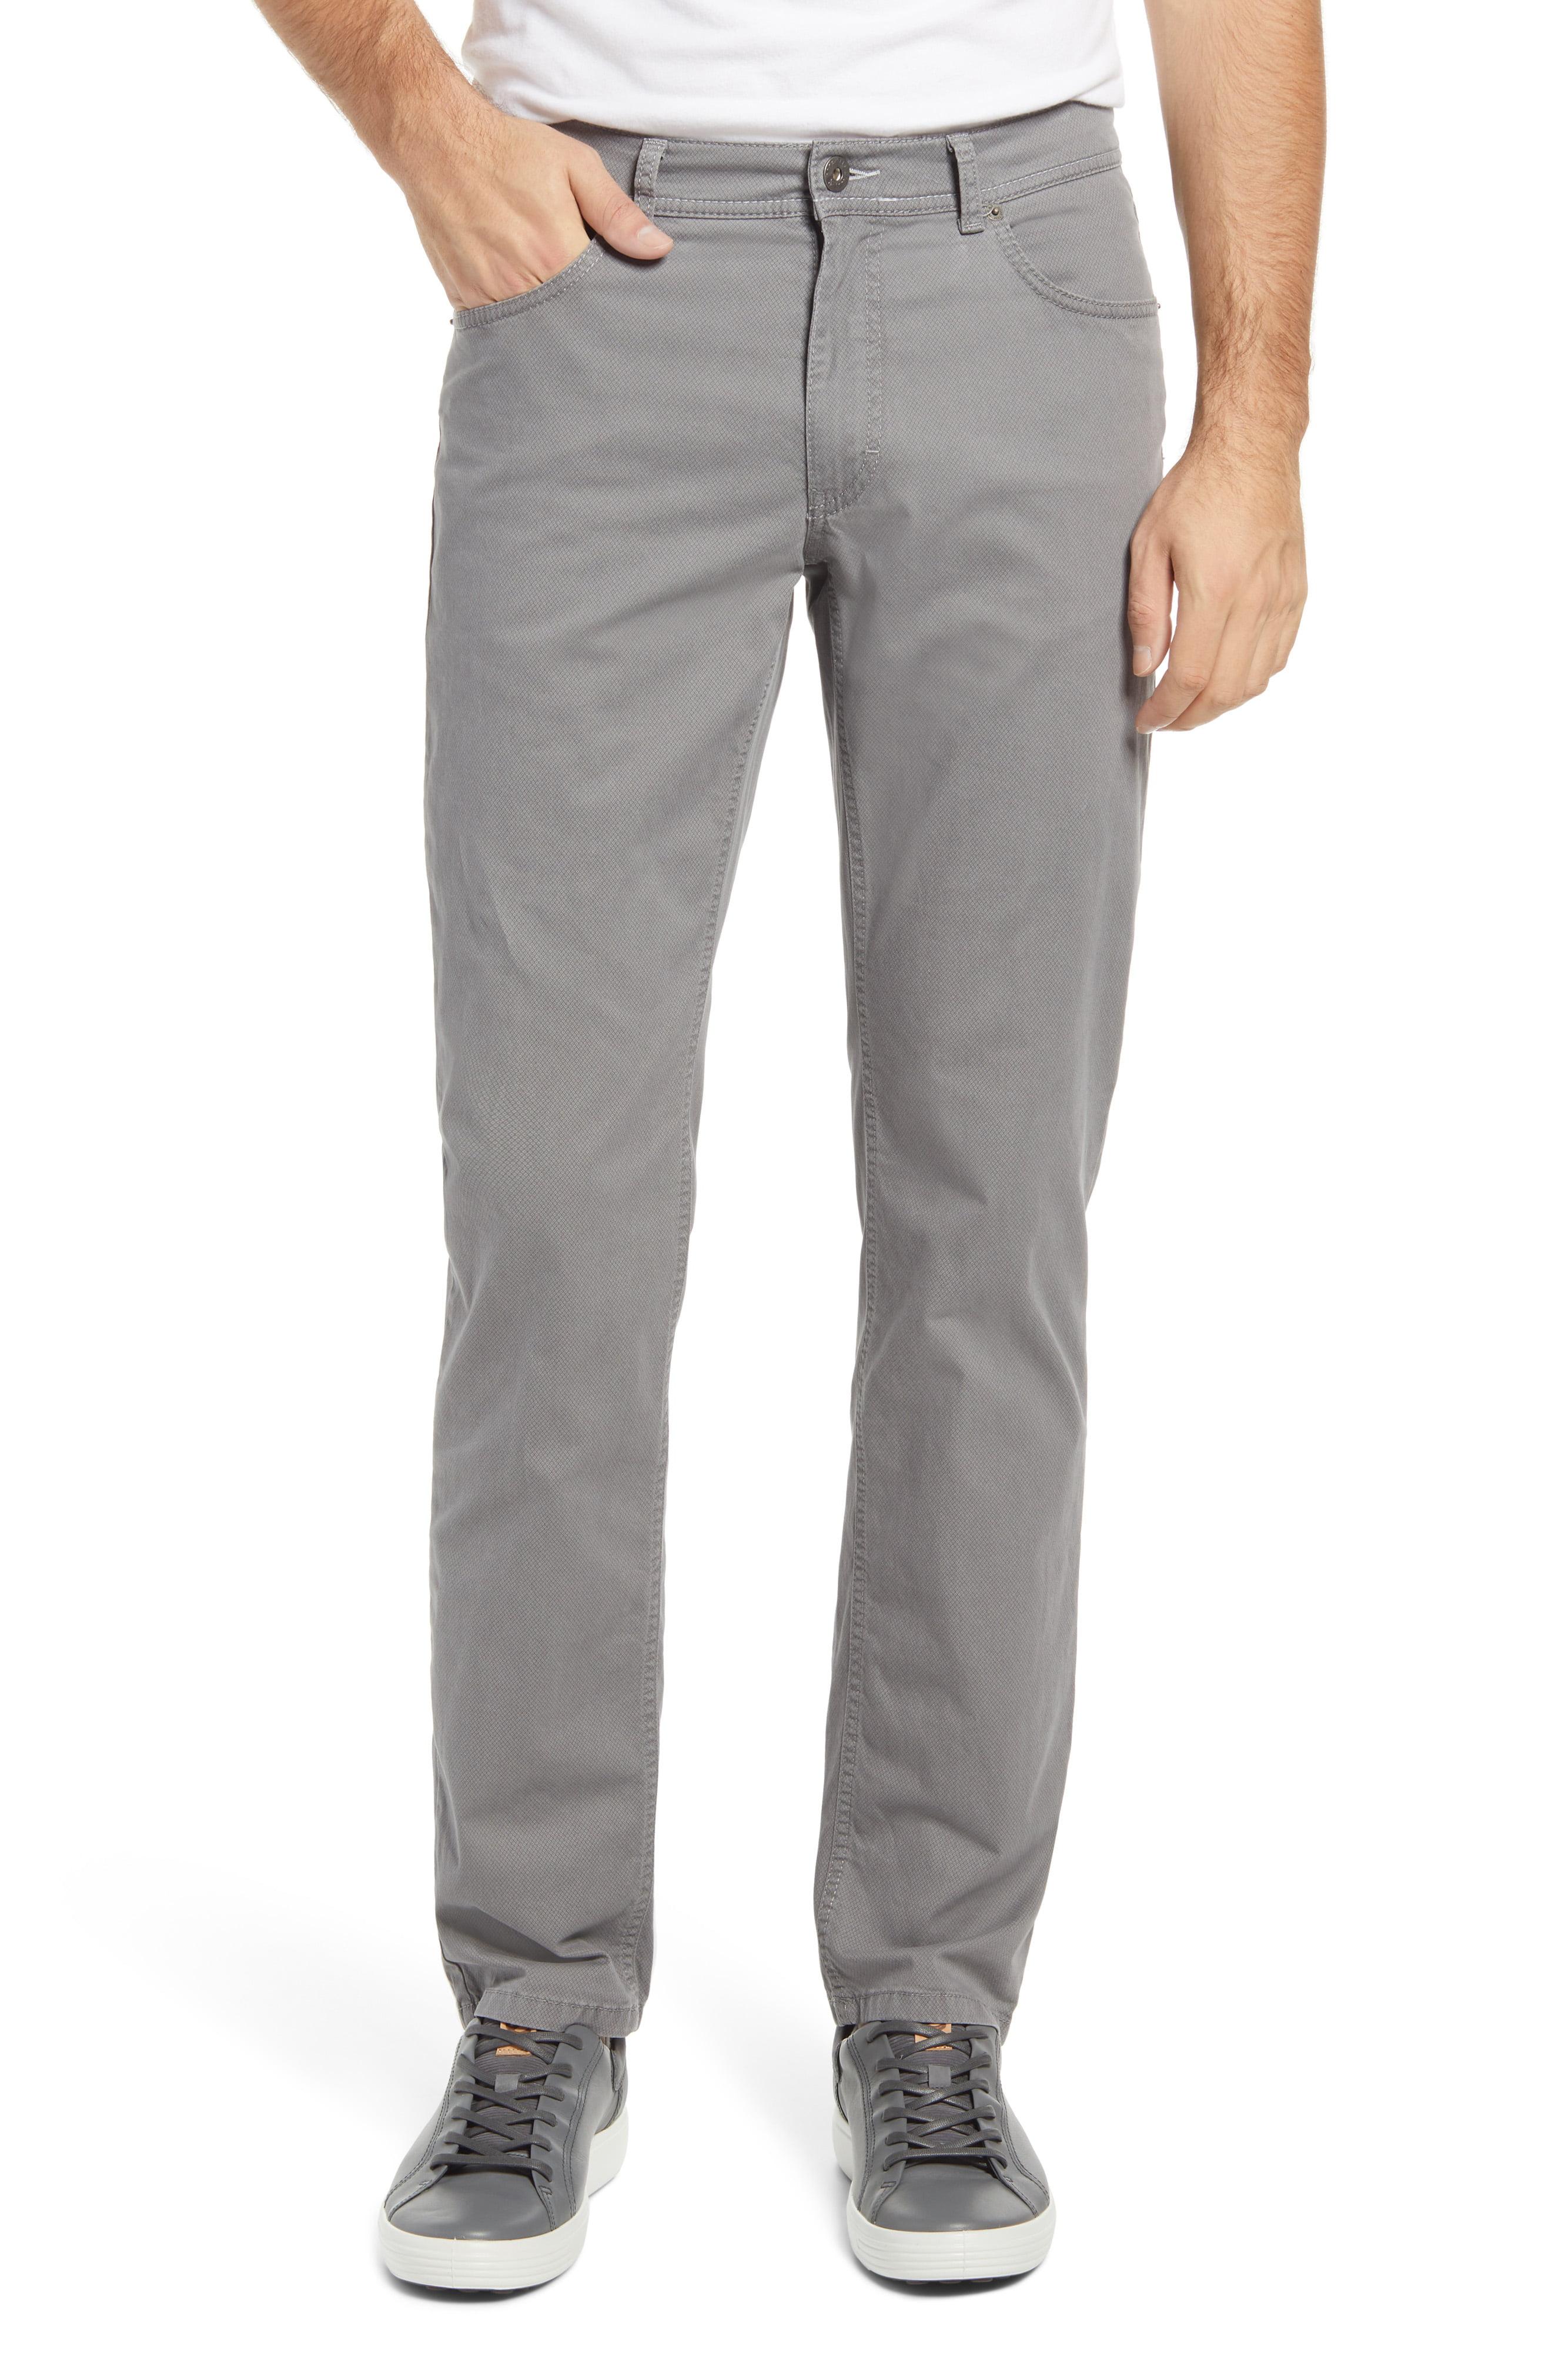 Brax Denim Cooper Fancy Five-pocket Pants in Grey (Gray) for Men - Lyst